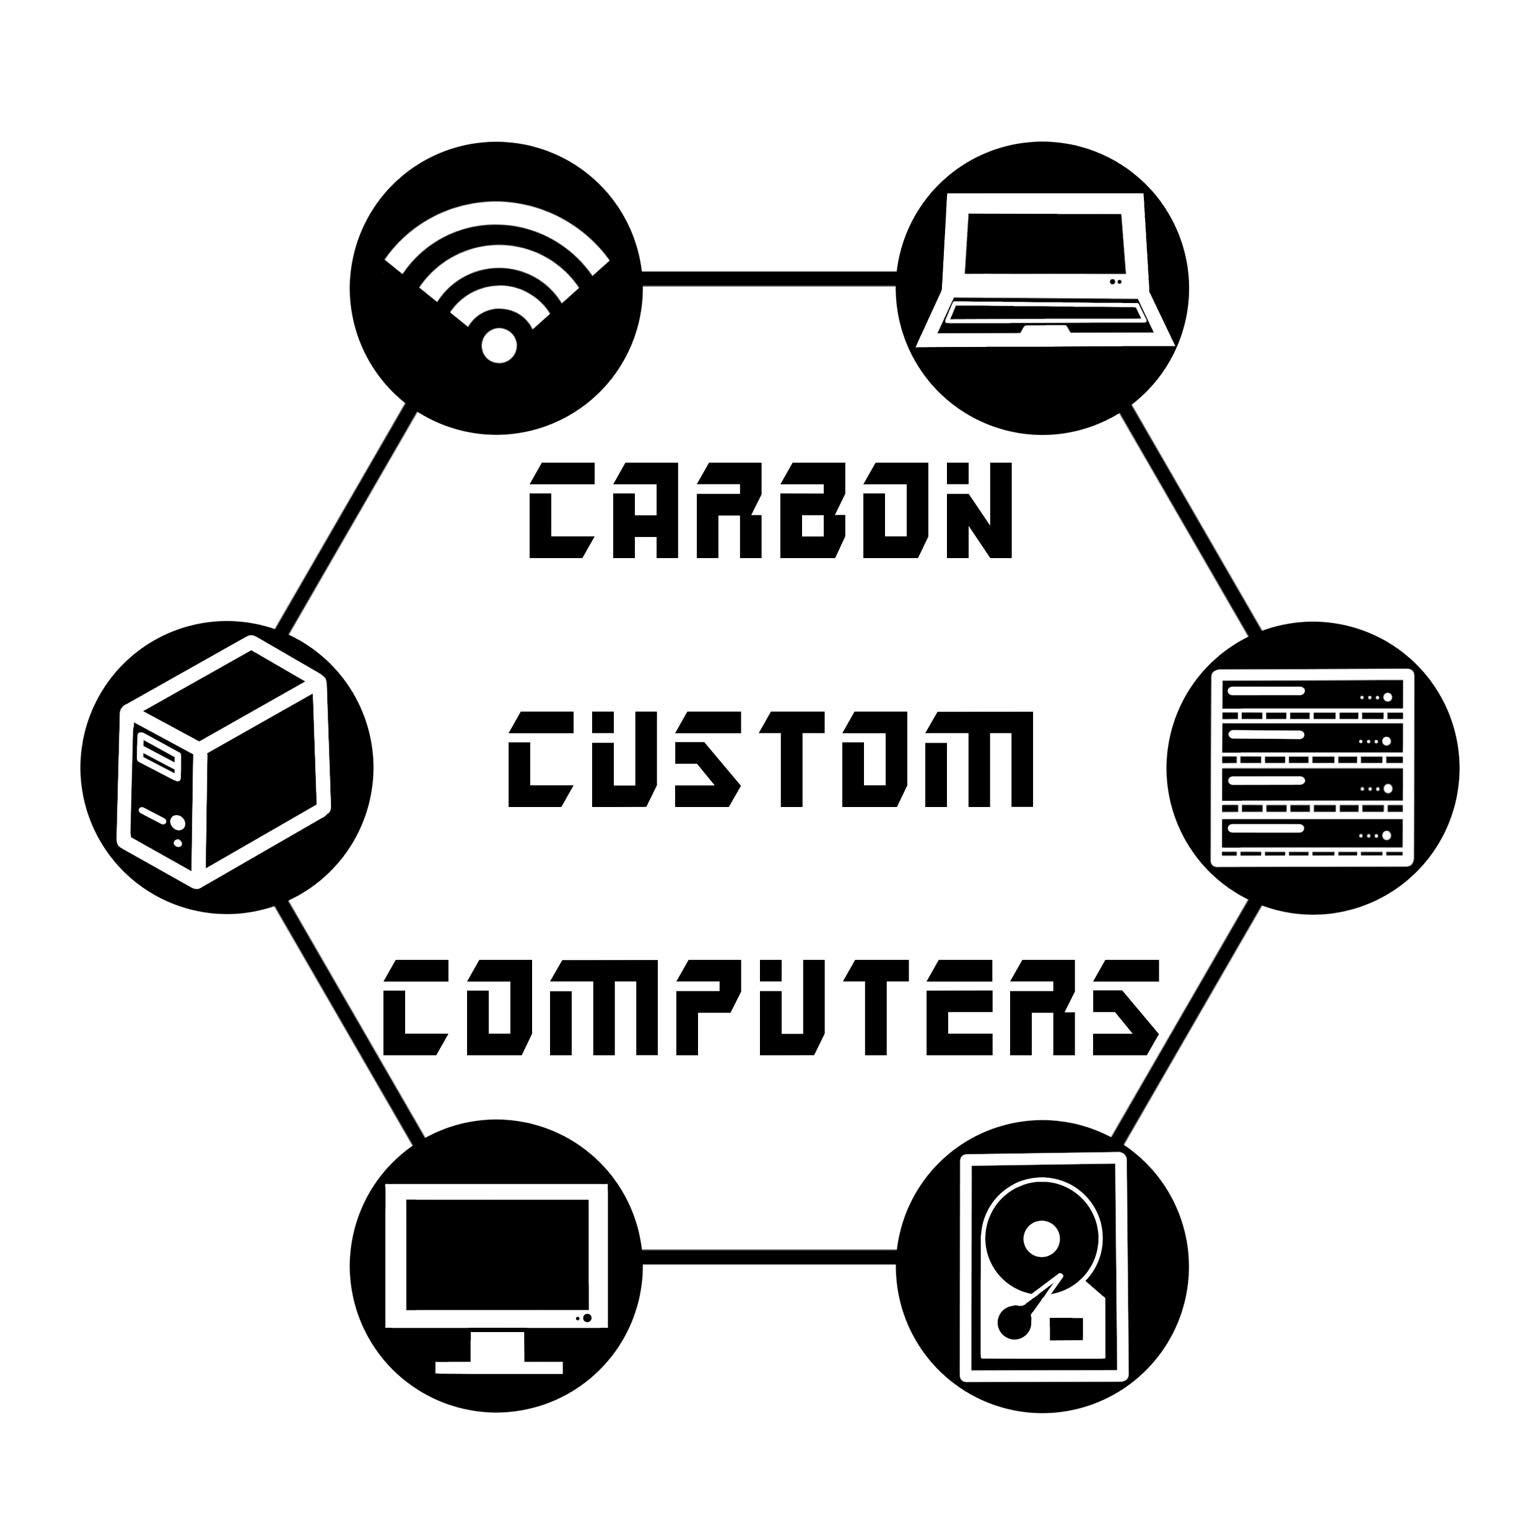 CARBON CUSTOM COMPUTERS - LAPTOP